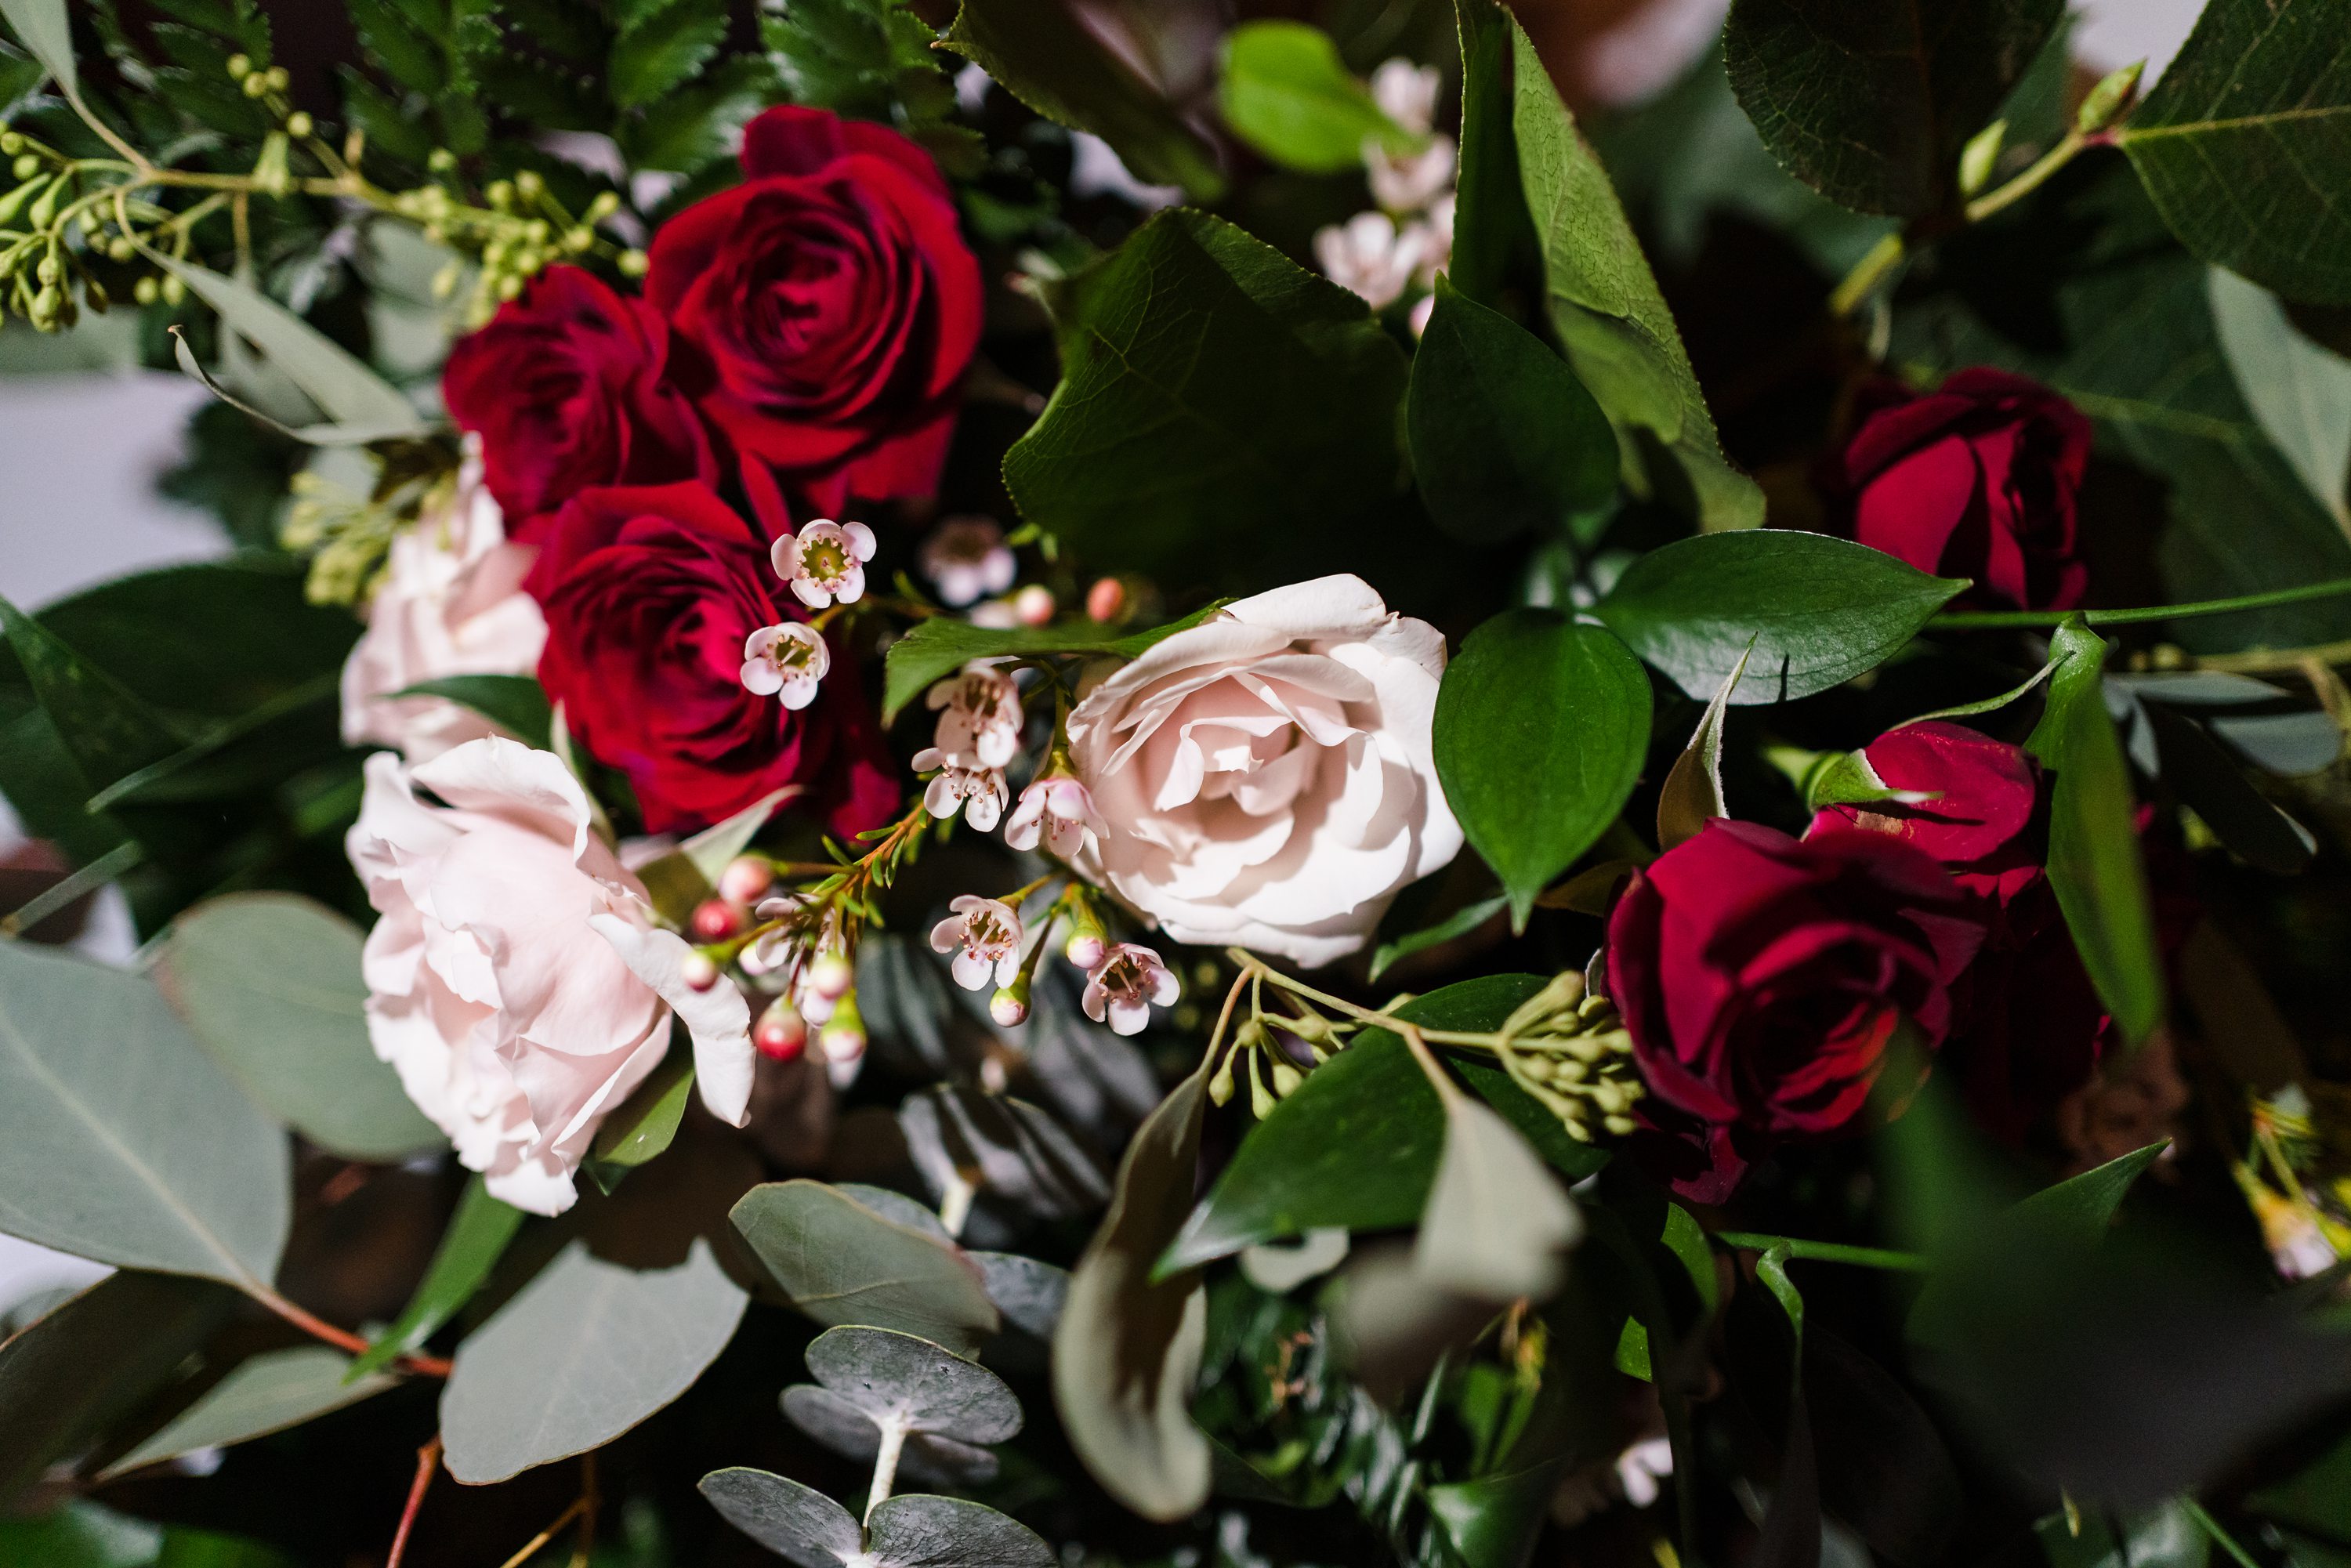 Best wedding photographer boston,New Hampshire wedding photographer,flowers